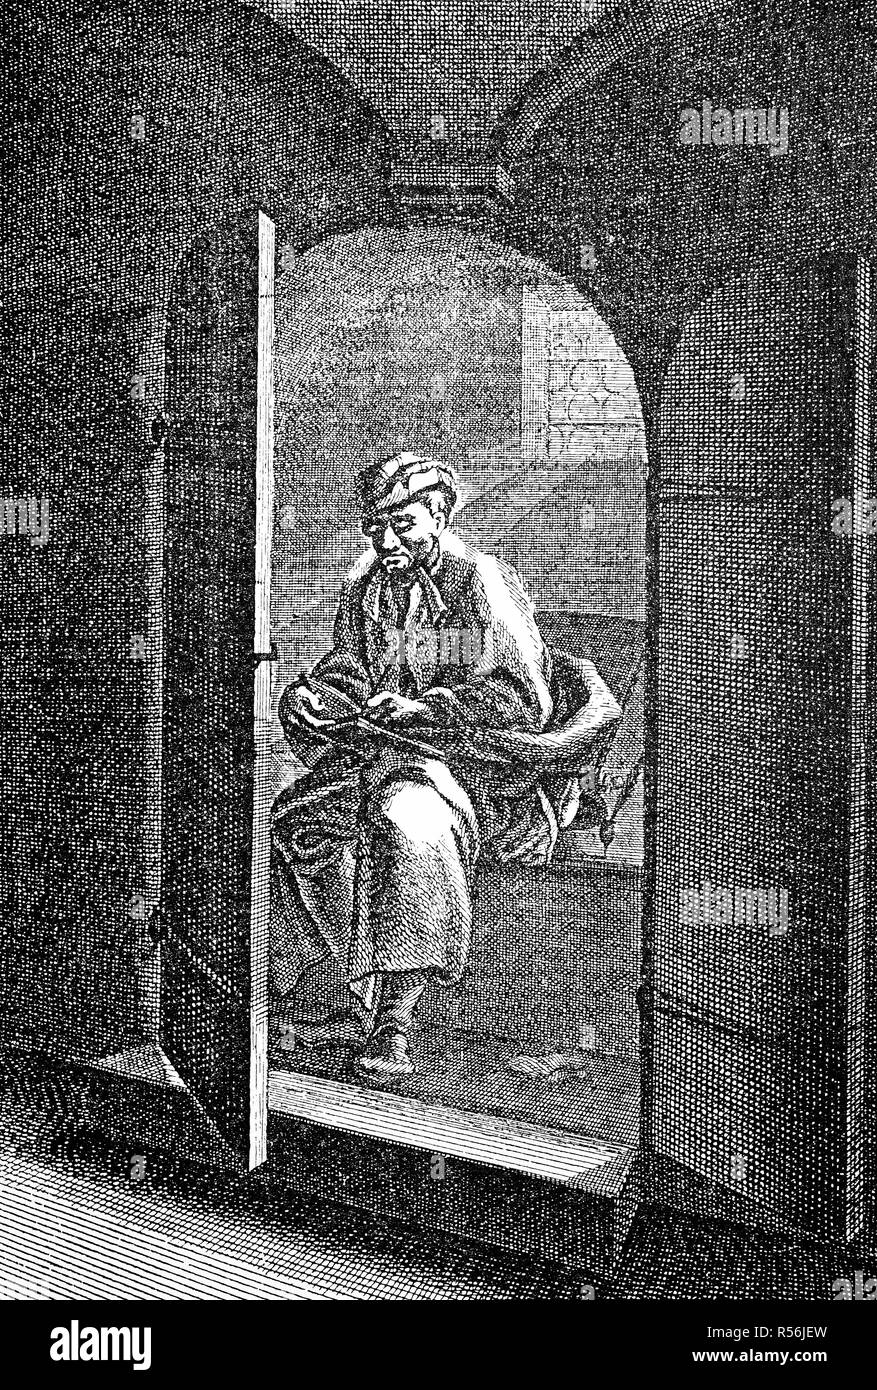 Student sitting on toilet, Loco secreto, 1750, woodcut, France Stock Photo